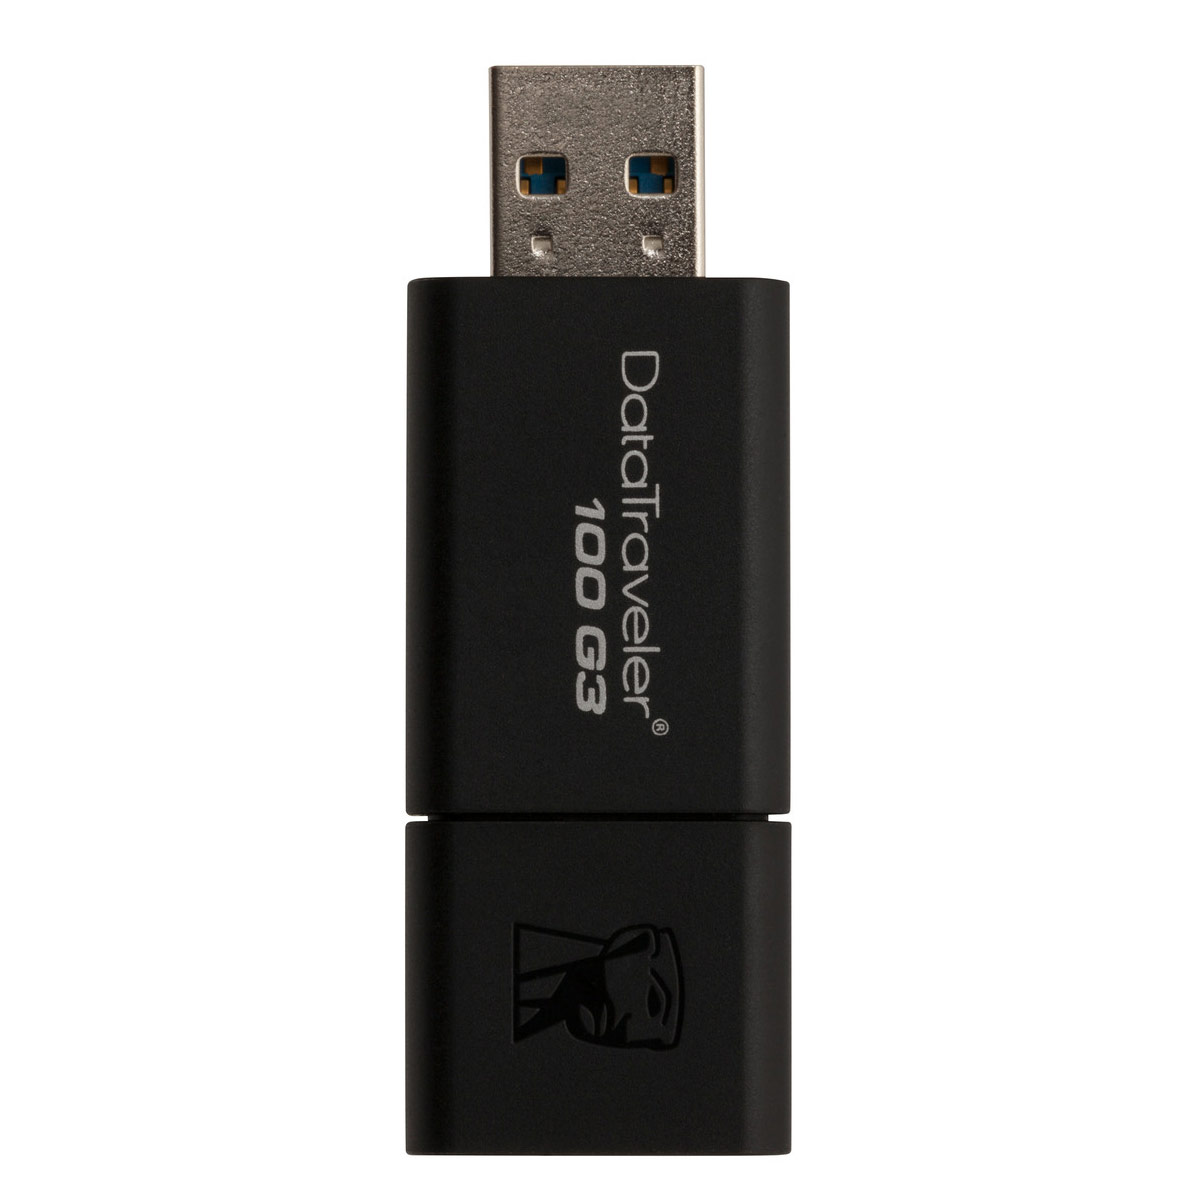 MEMORIA FLASH KINGSTON 32 GB USB 3.0 (DT100G3/32GB)